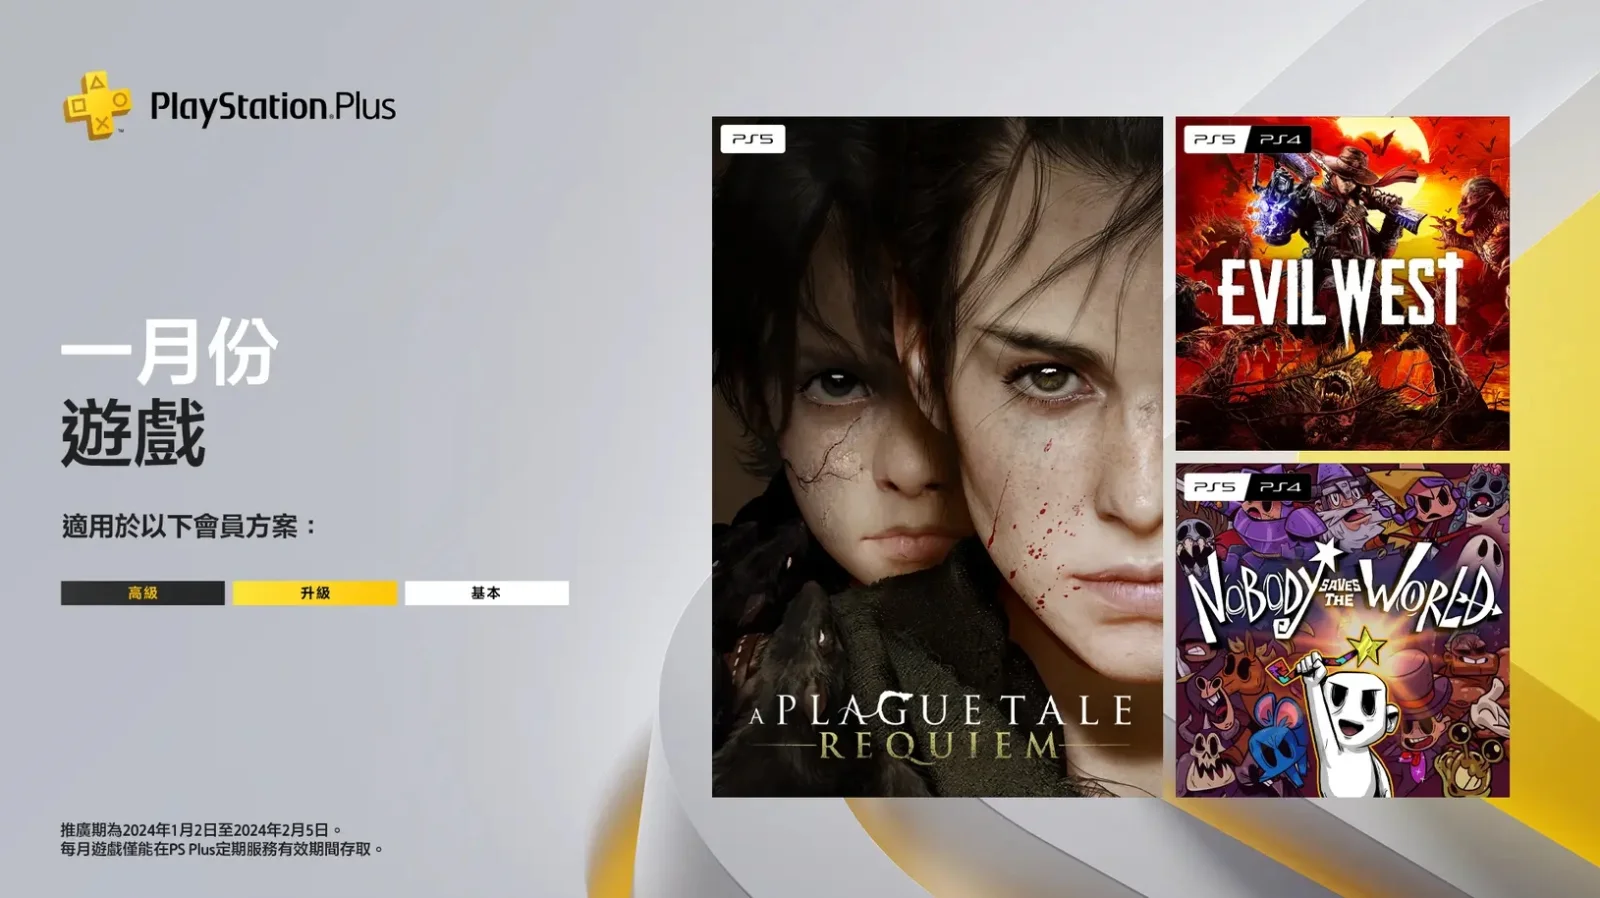 PlayStation Plus 1月会免游戏：《瘟疫传说：安魂曲》、《暗邪西部》、《无名小卒救世界》